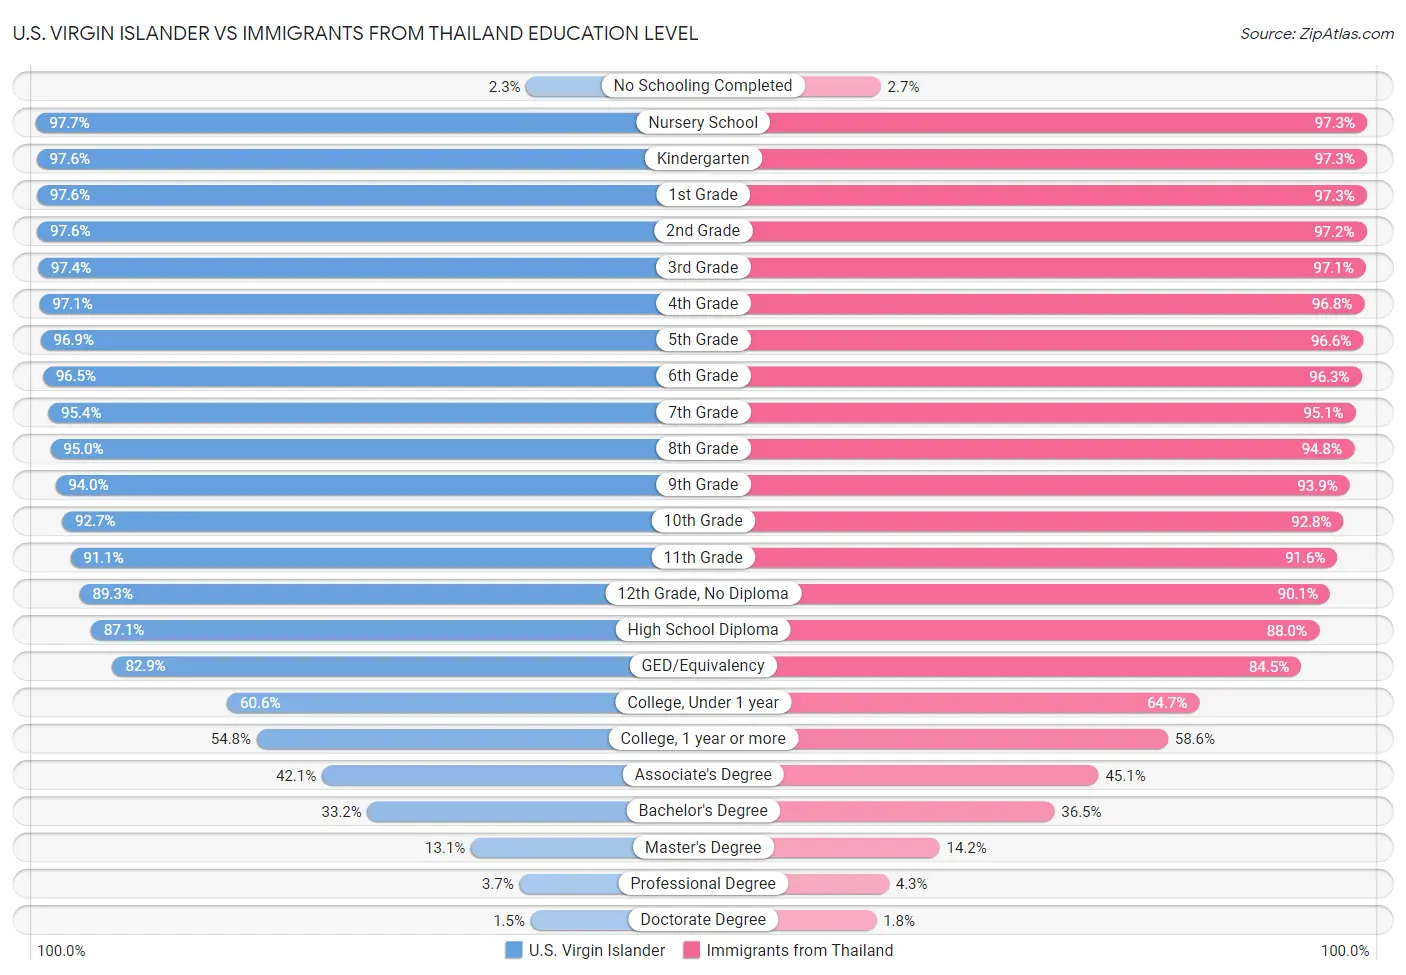 U.S. Virgin Islander vs Immigrants from Thailand Education Level